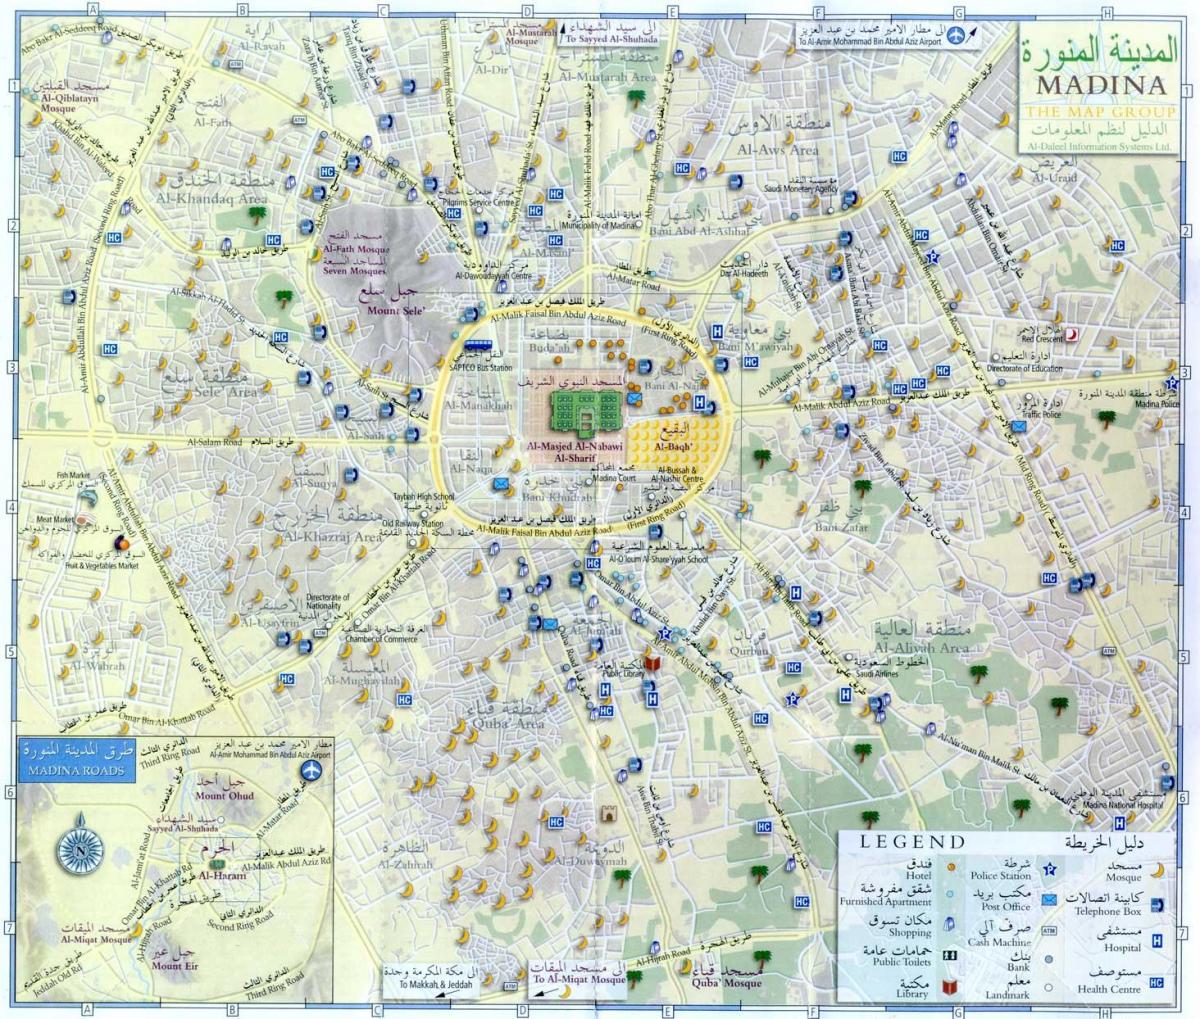 Mecca (Makkah) streets map